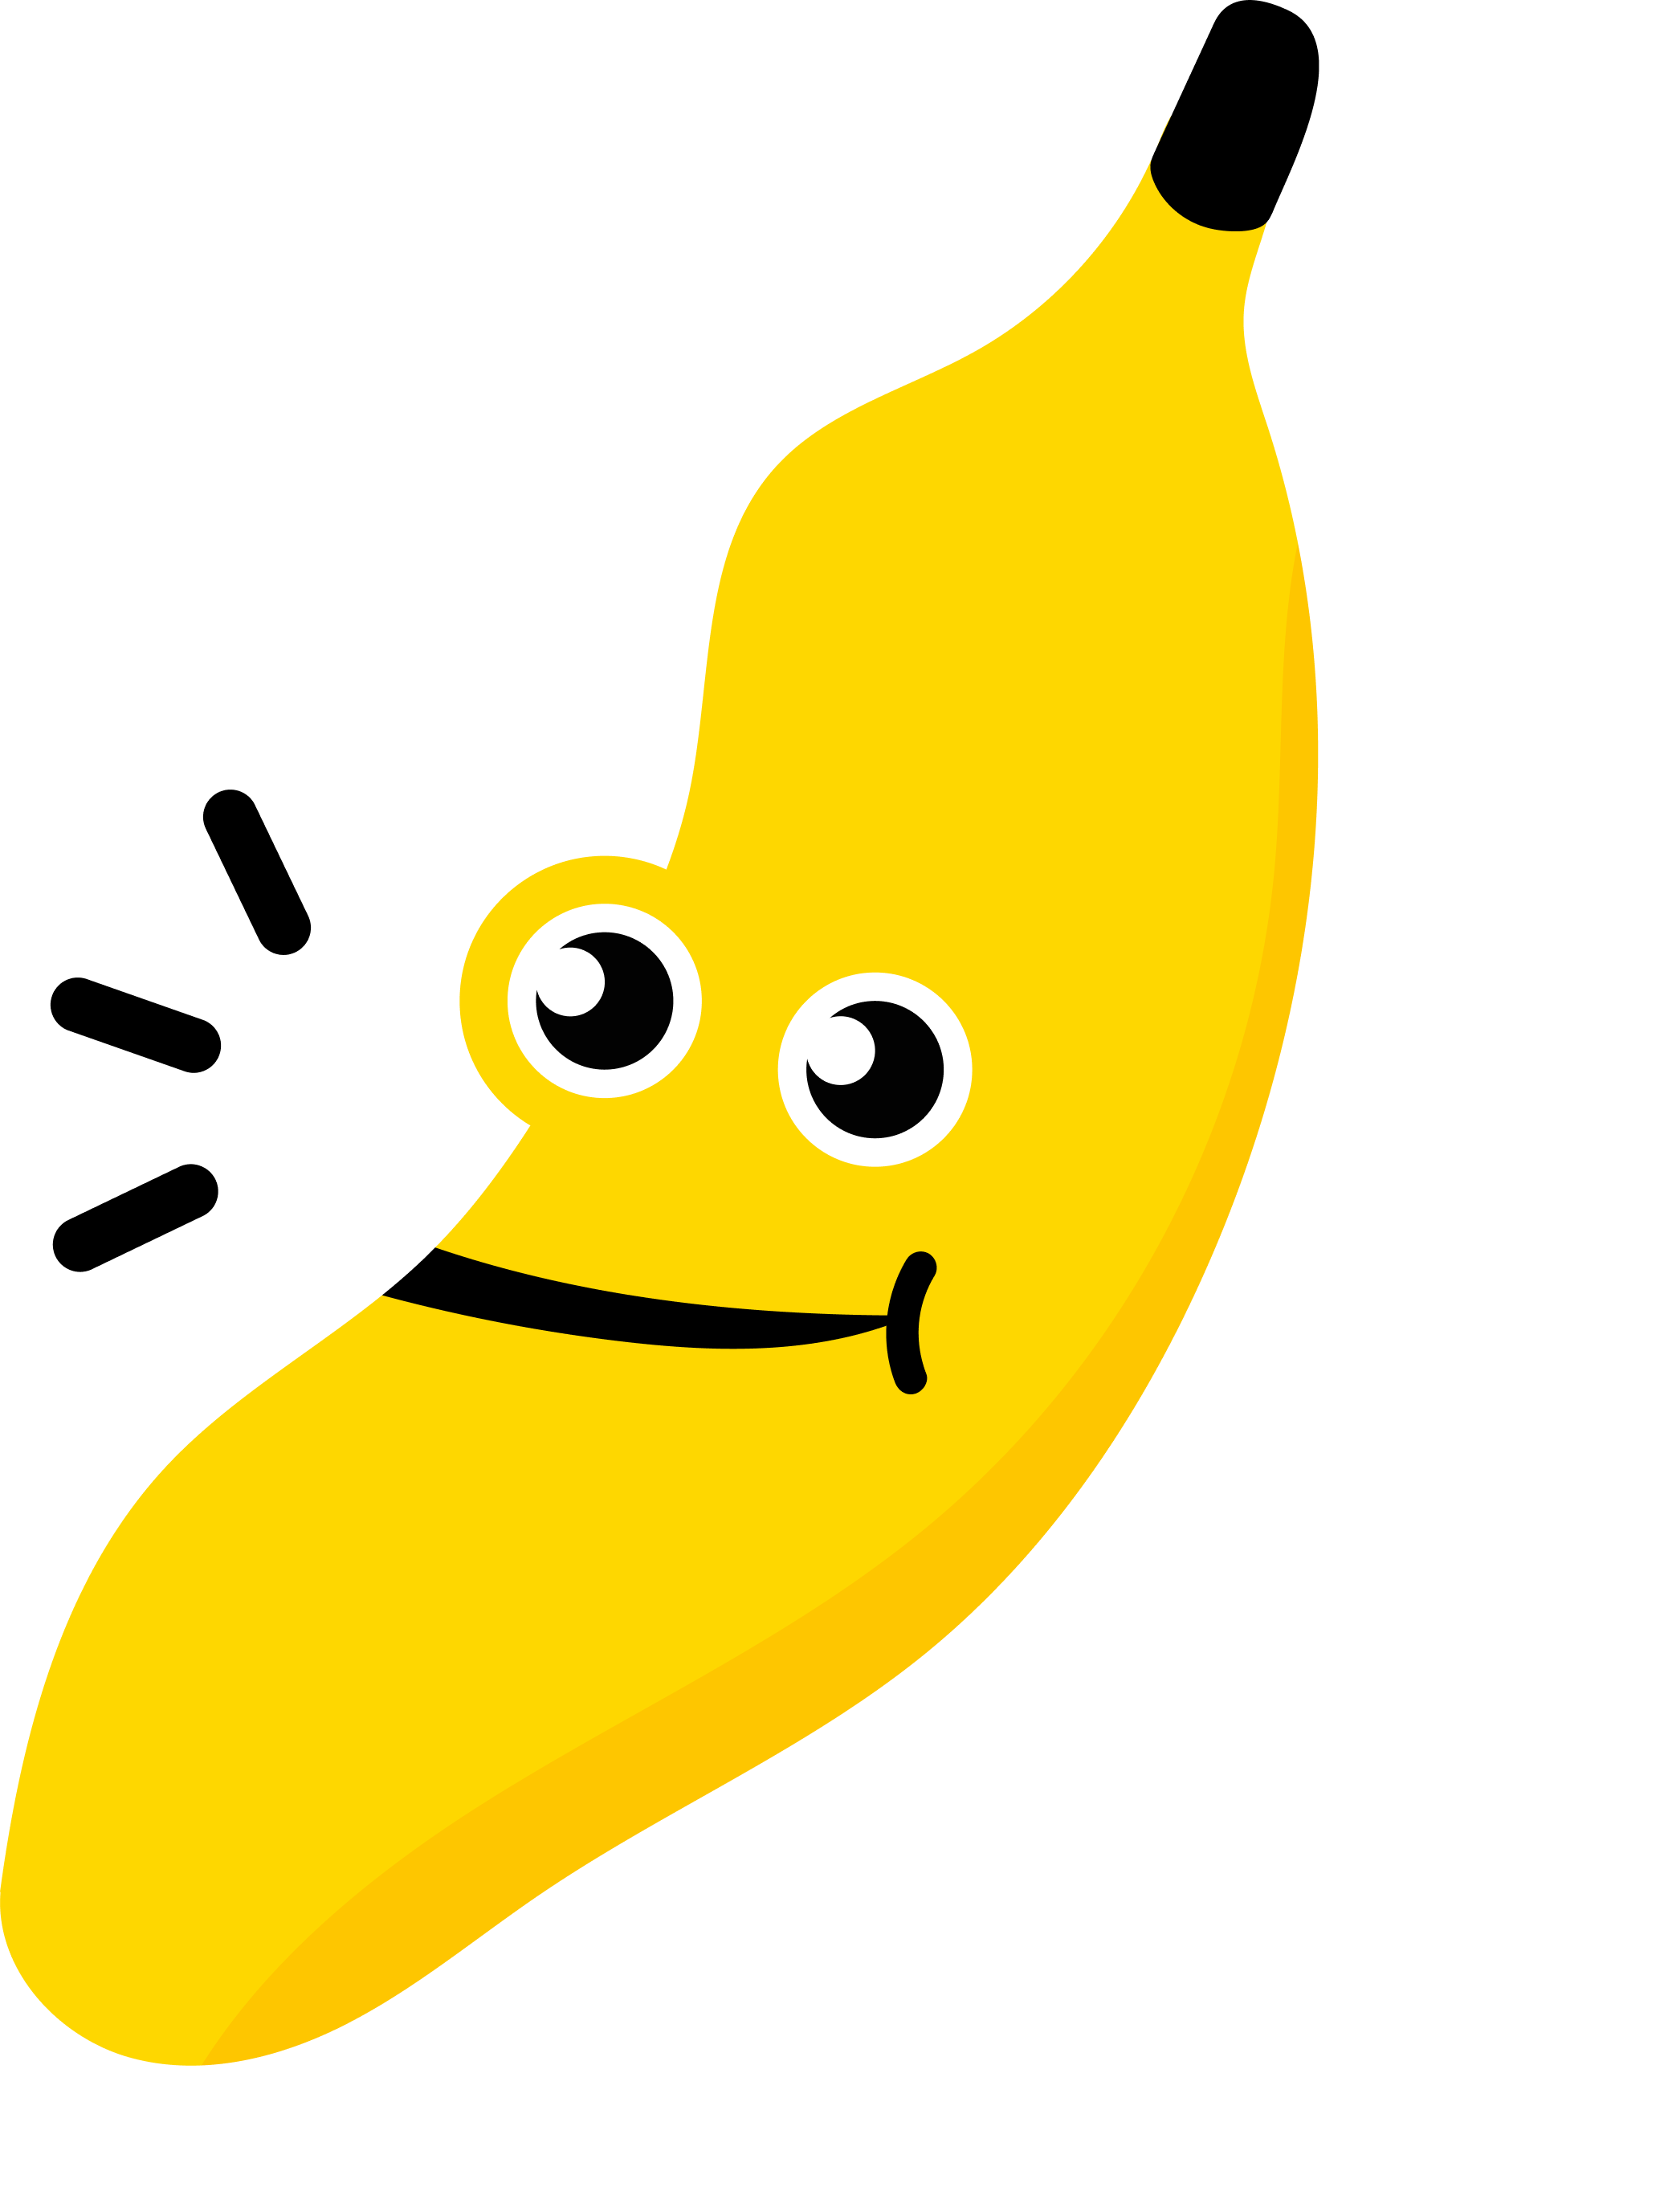 nana banana